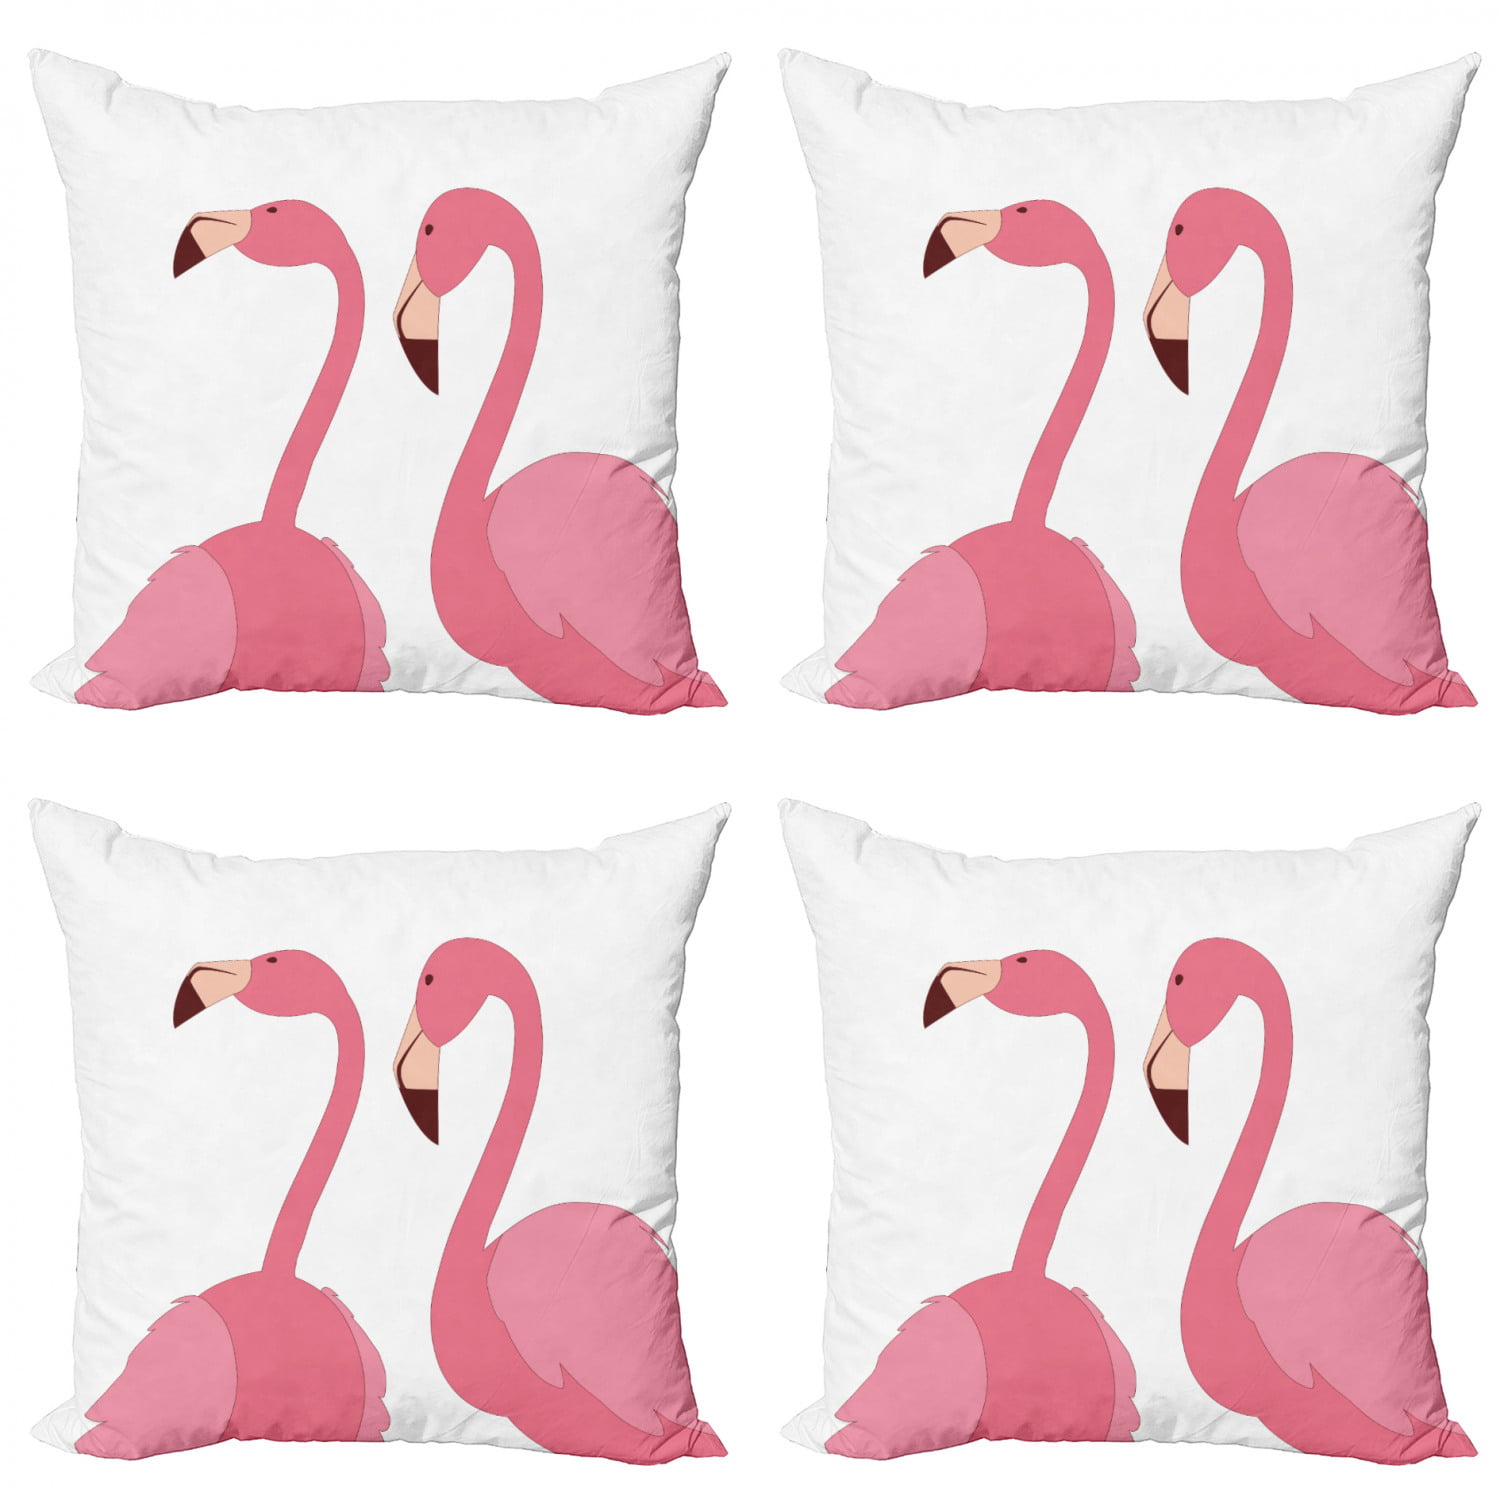 decorative throw pillow flamingo hibiscus flower exotic cushion cover 